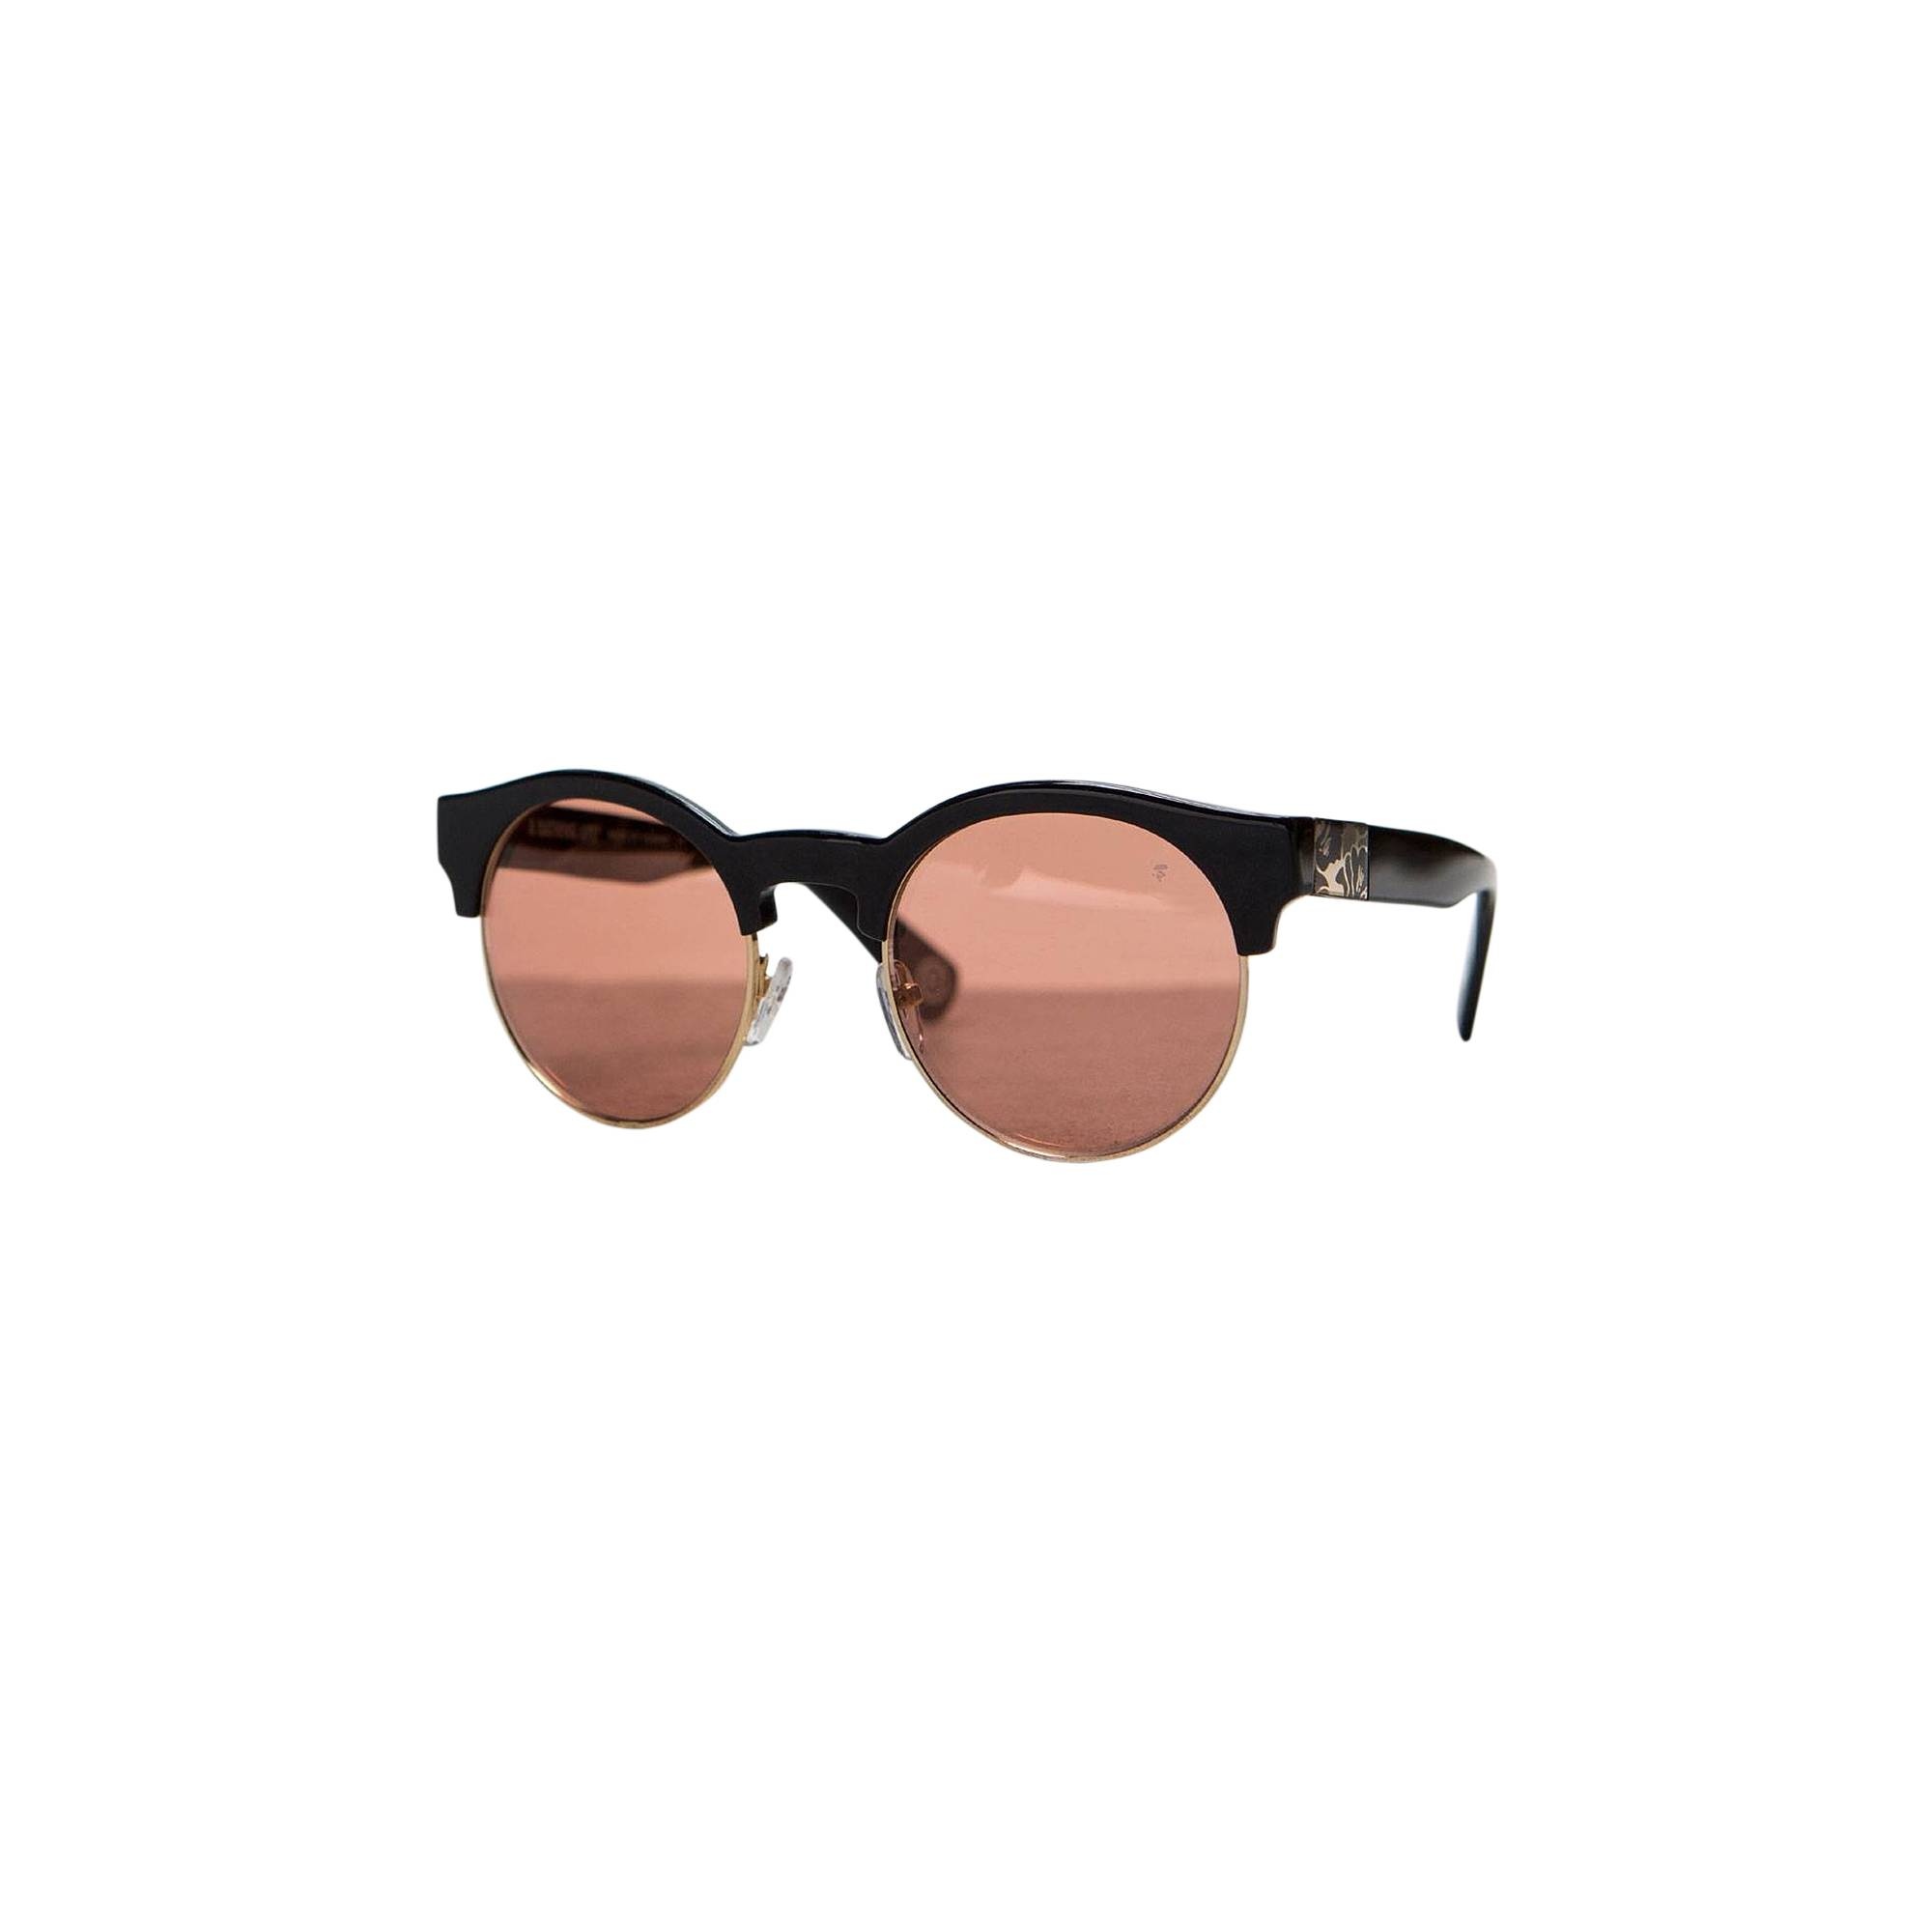 BAPE Sunglasses 'Black' - 1